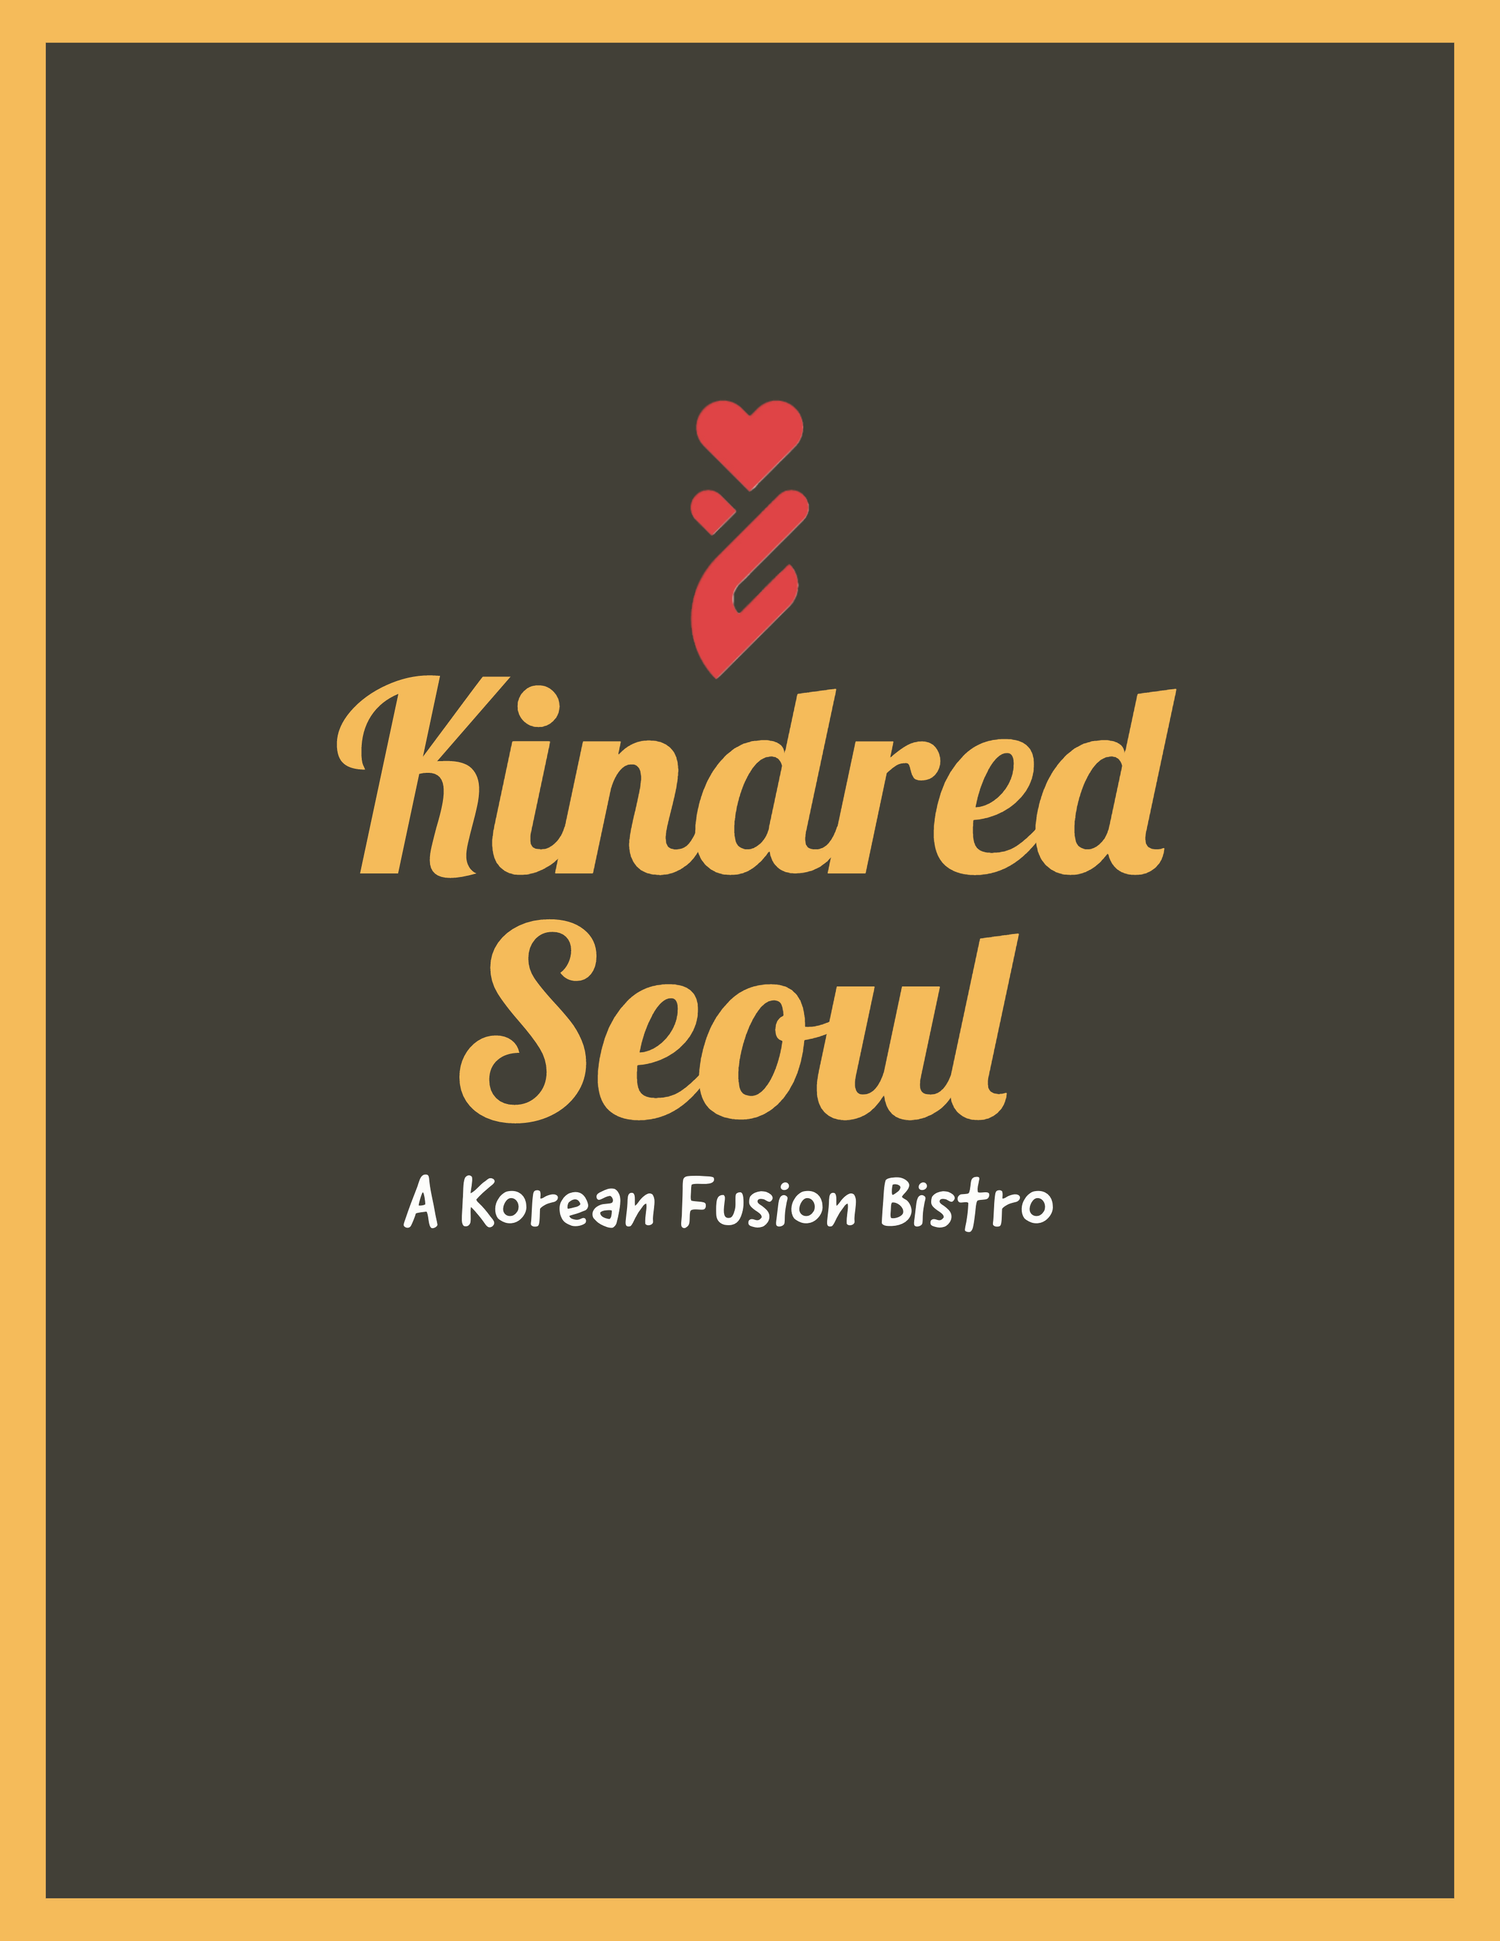 Kindred Seoul Bistro